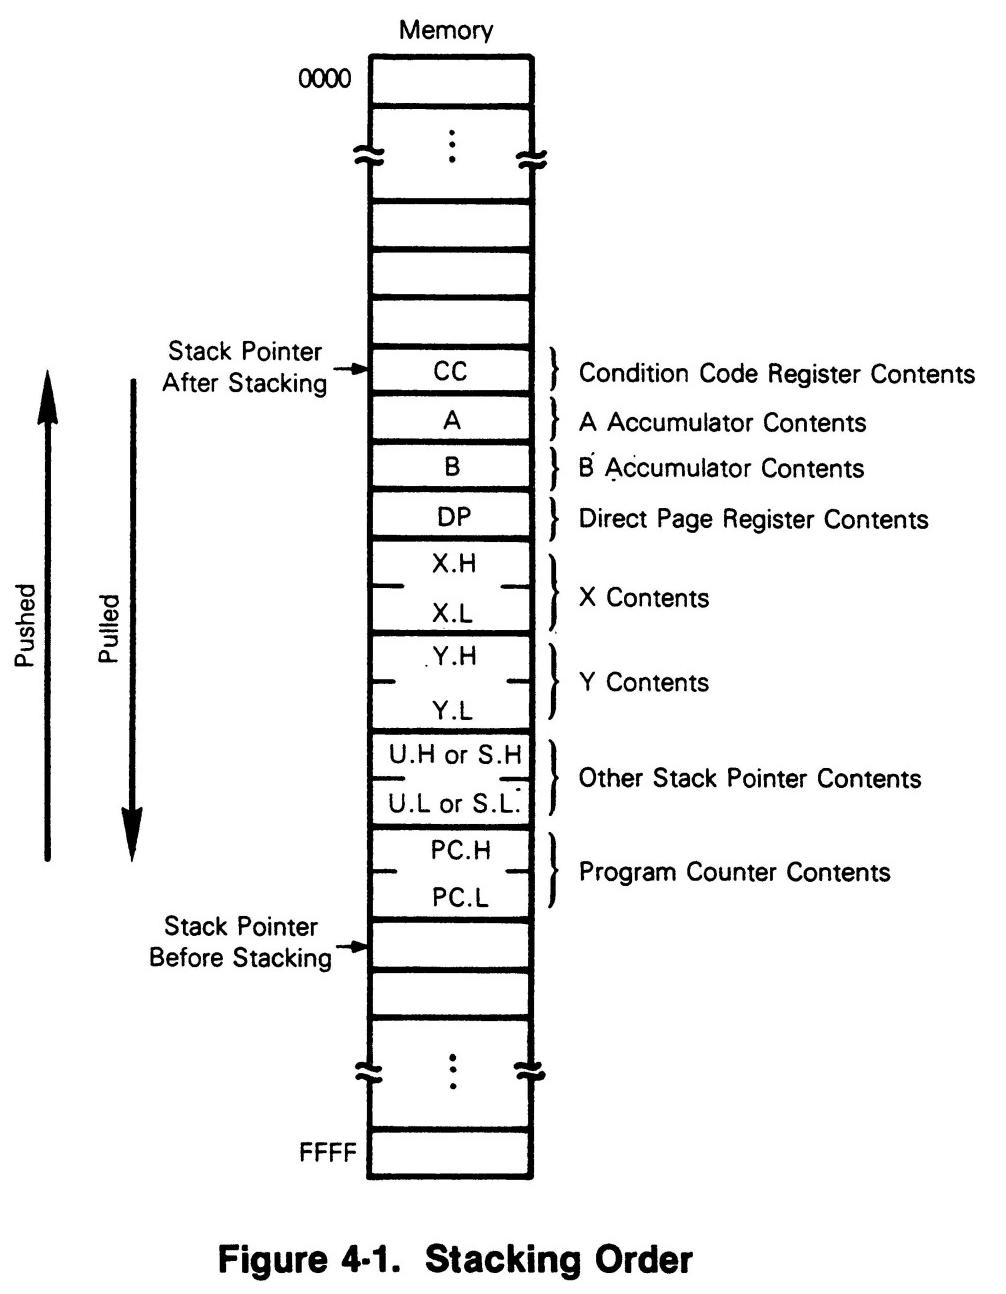 Figure 4-1: Stacking Order